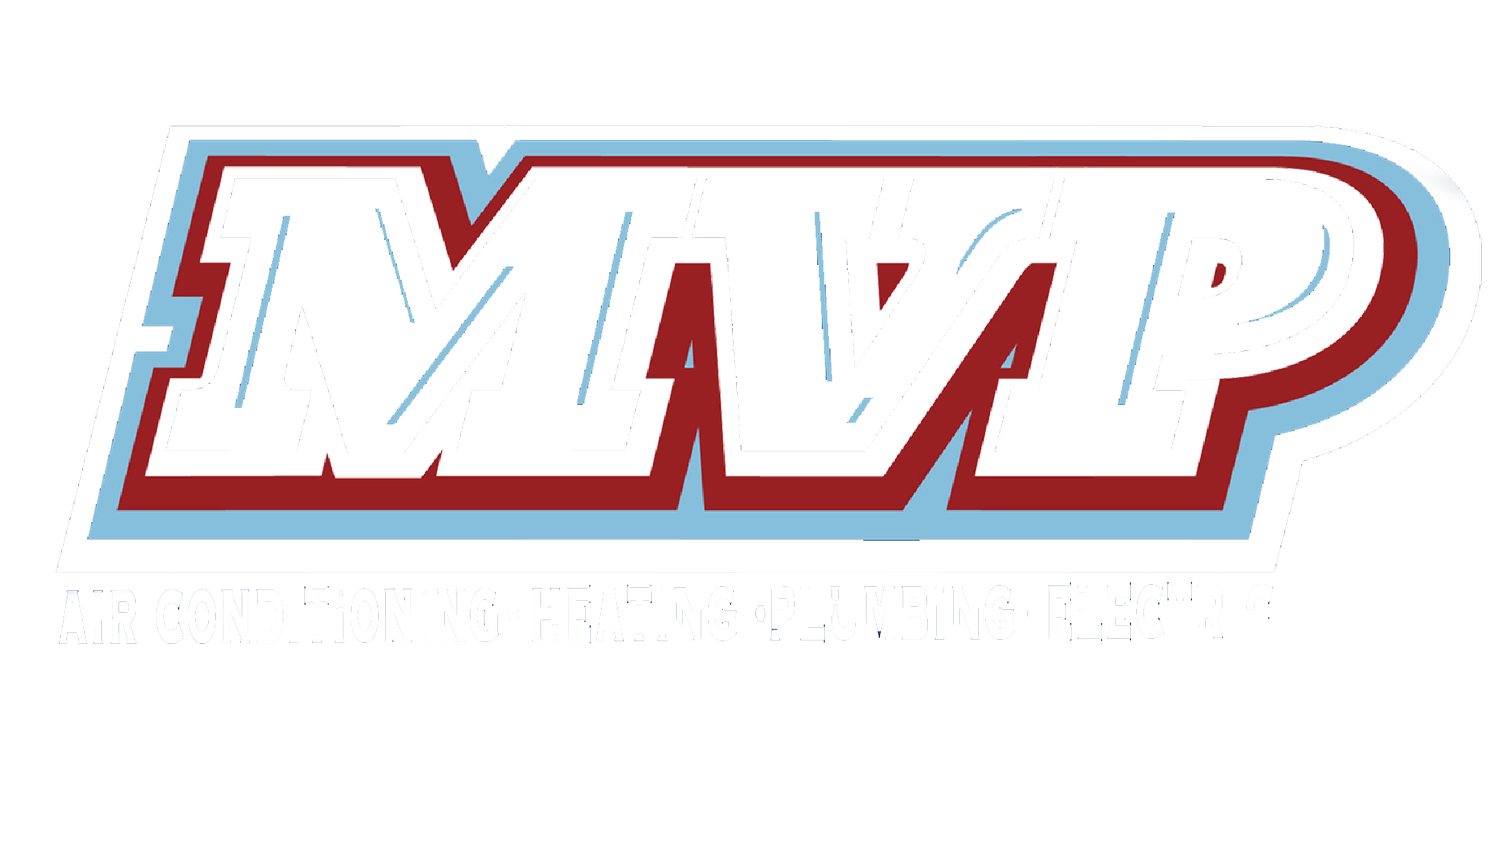 MVP Air Conditioning, Heating, Plumbing &amp; Electric